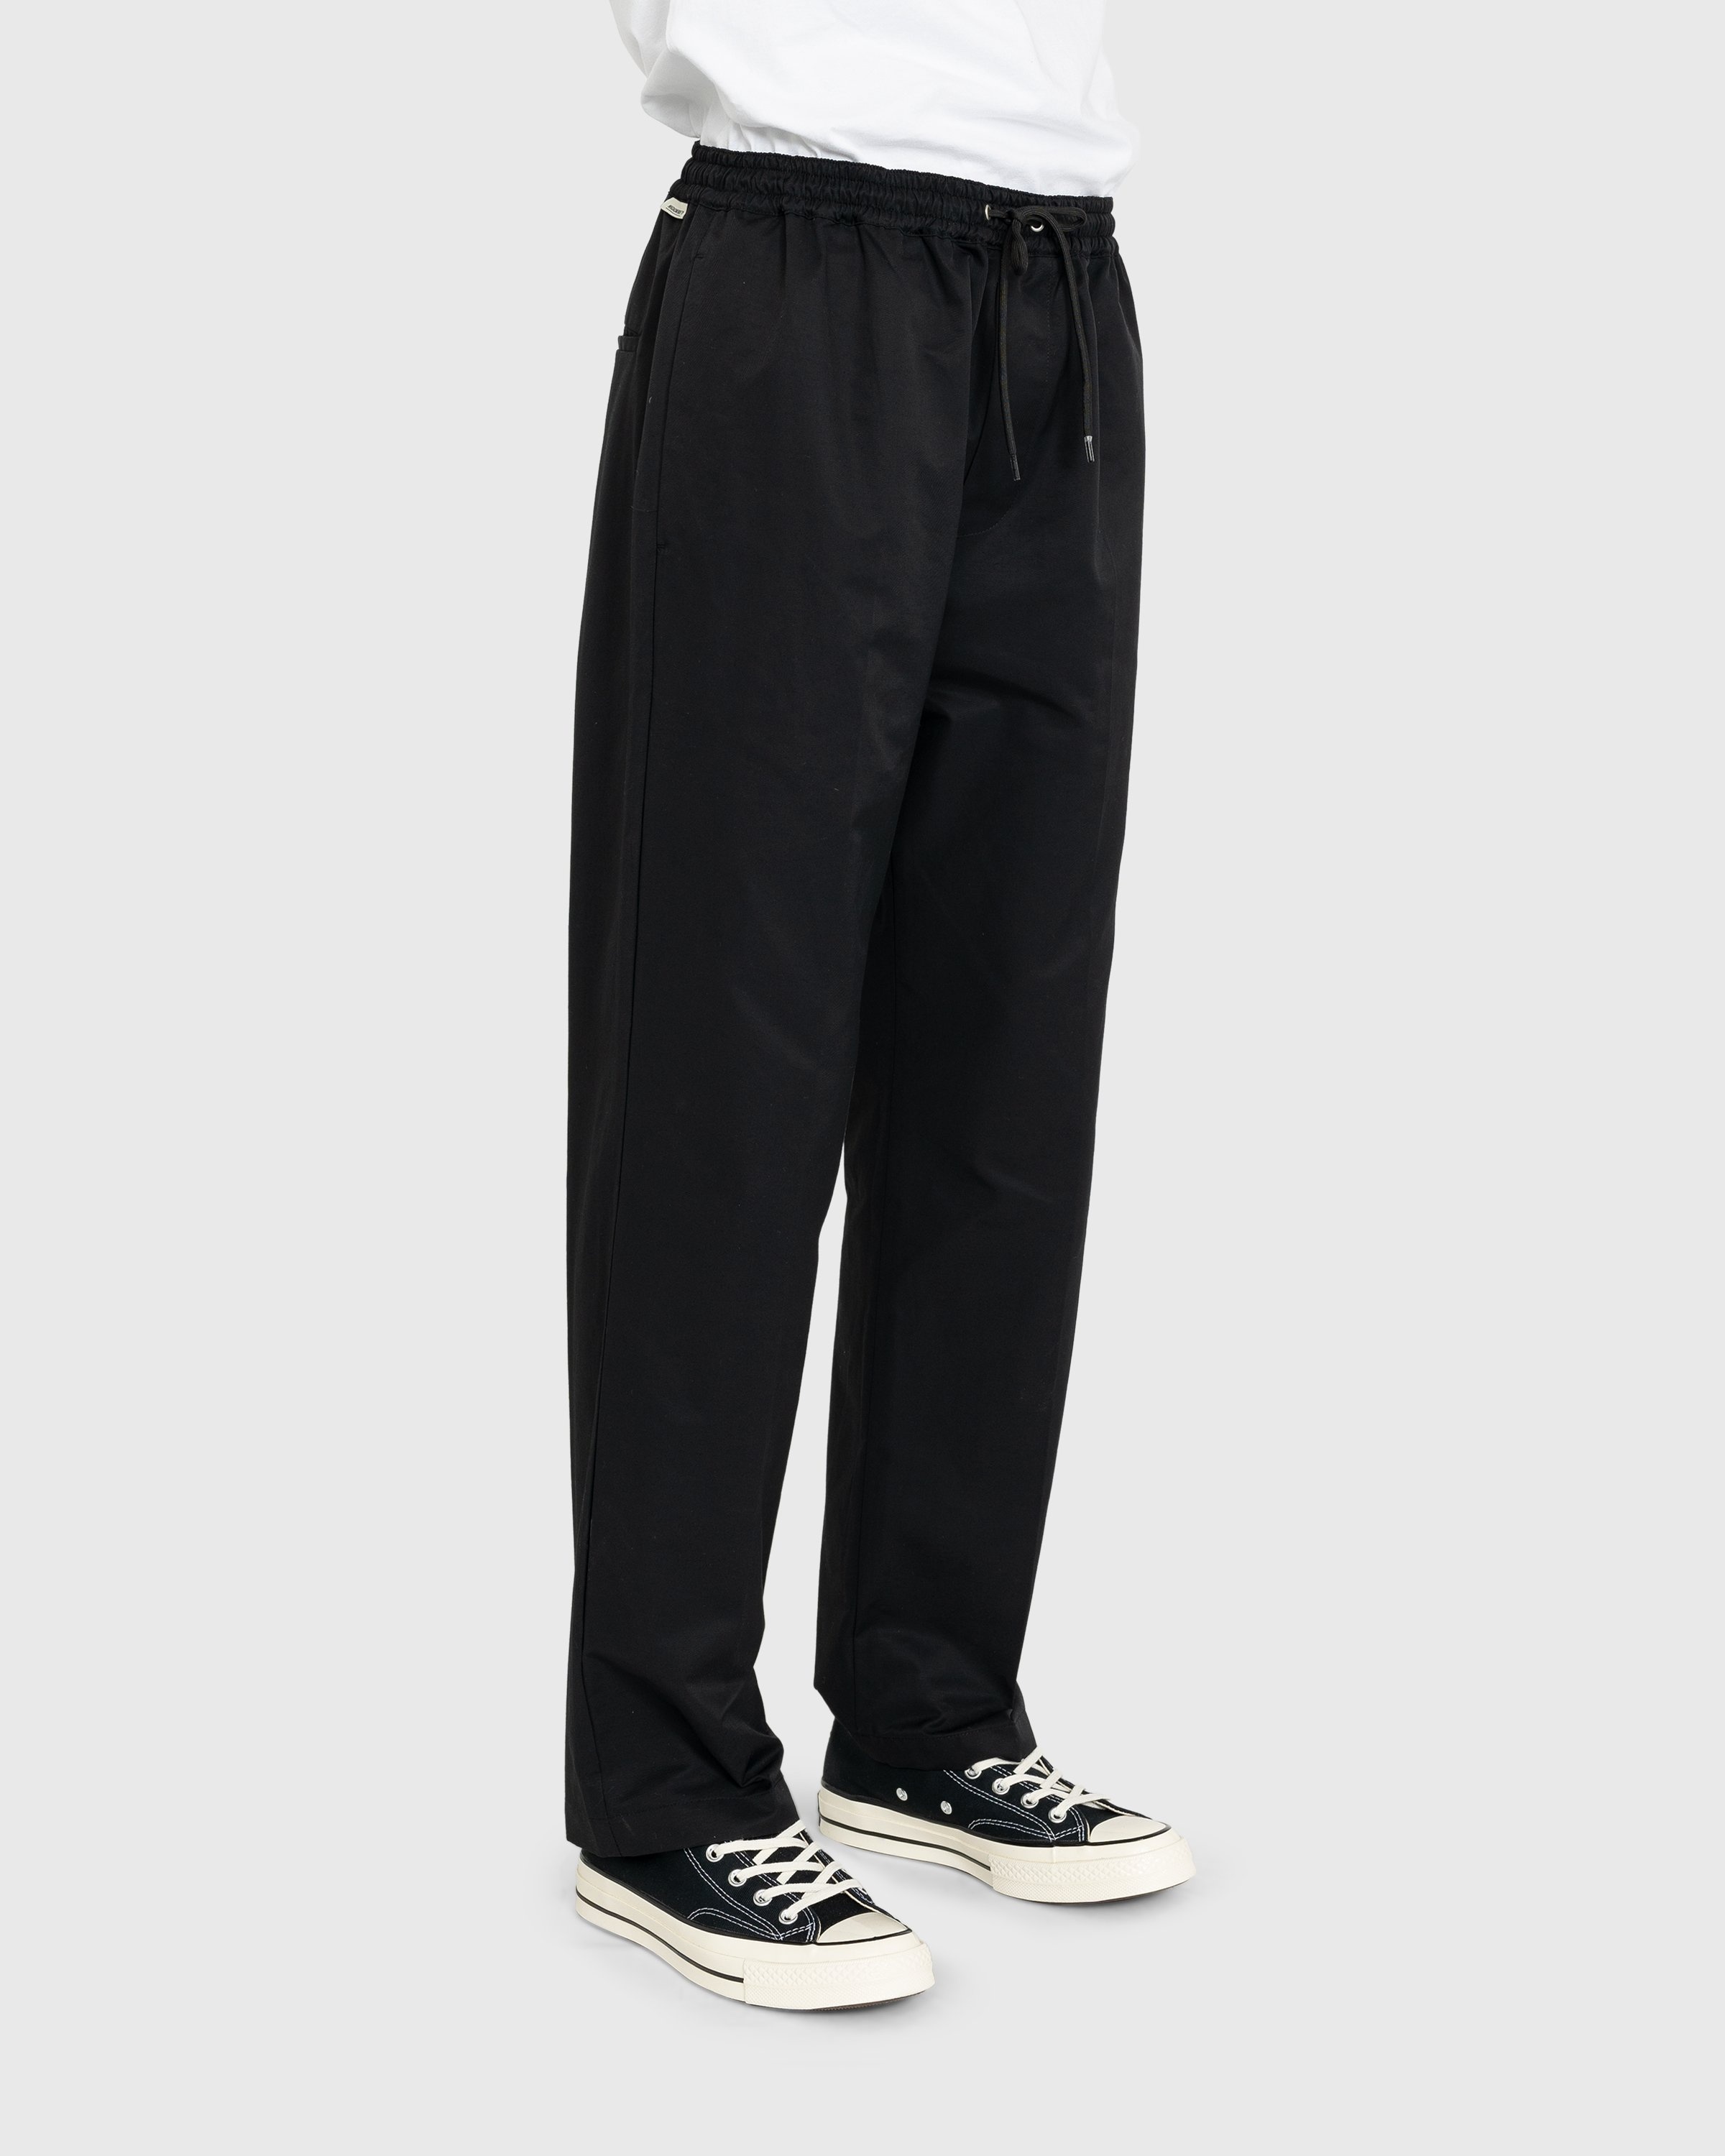 Highsnobiety – Cotton Nylon Elastic Pants Black - Trousers - Black - Image 4